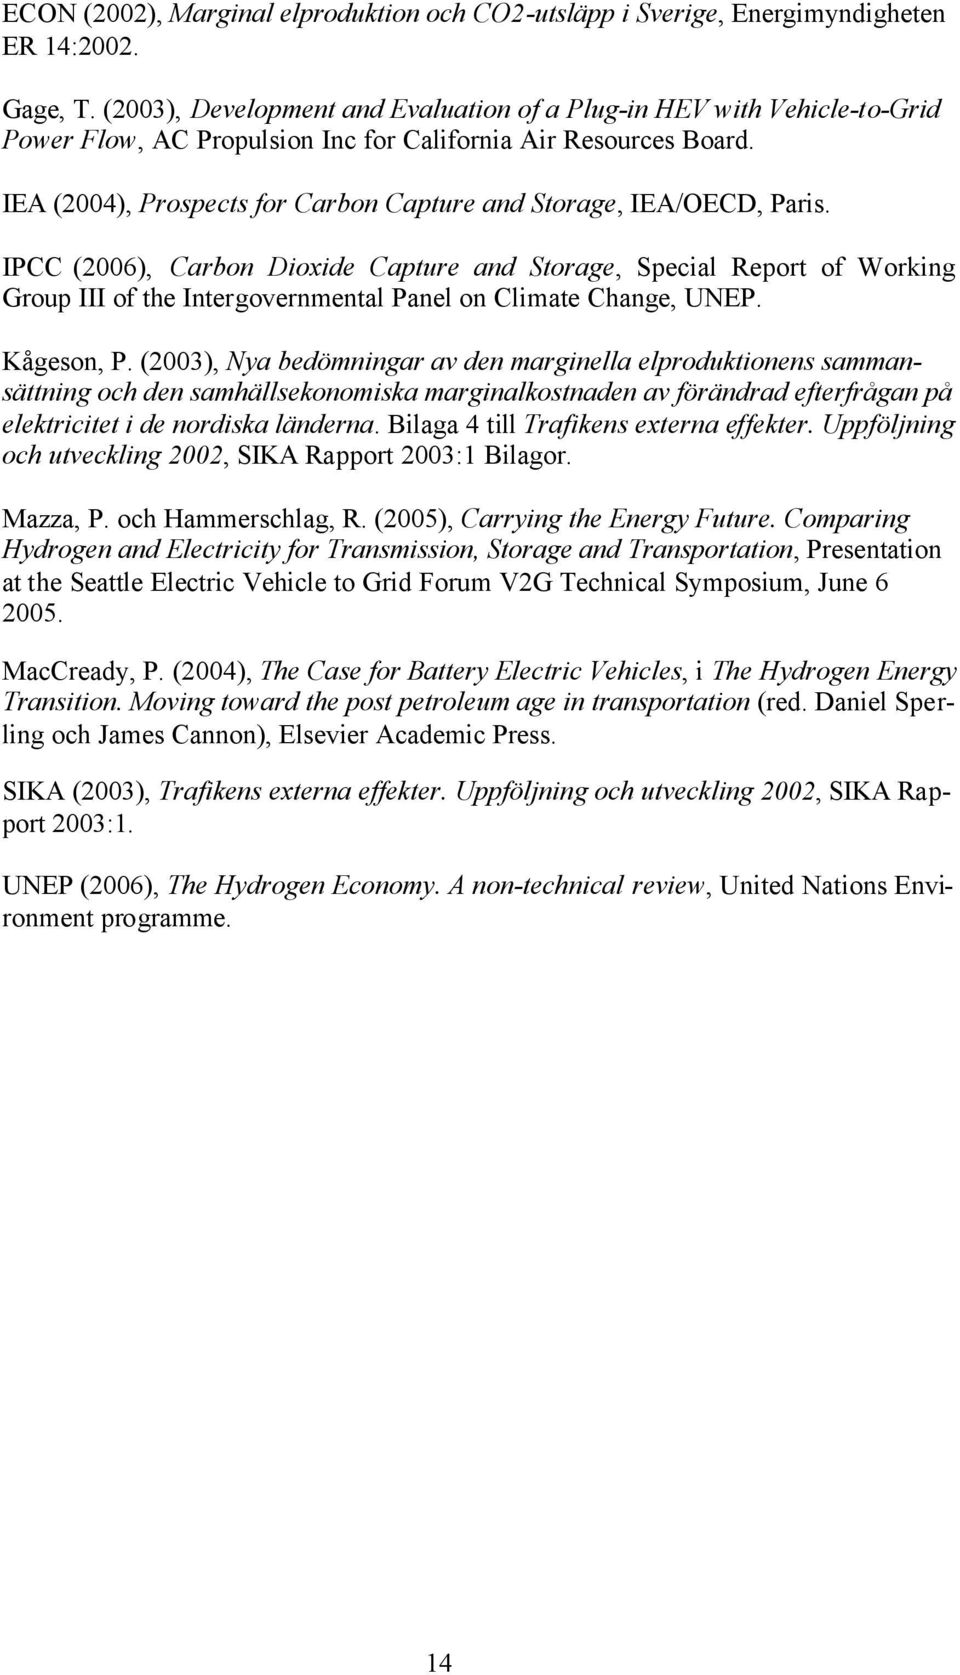 IEA (2004), Prospects for Carbon Capture and Storage, IEA/OECD, Paris.